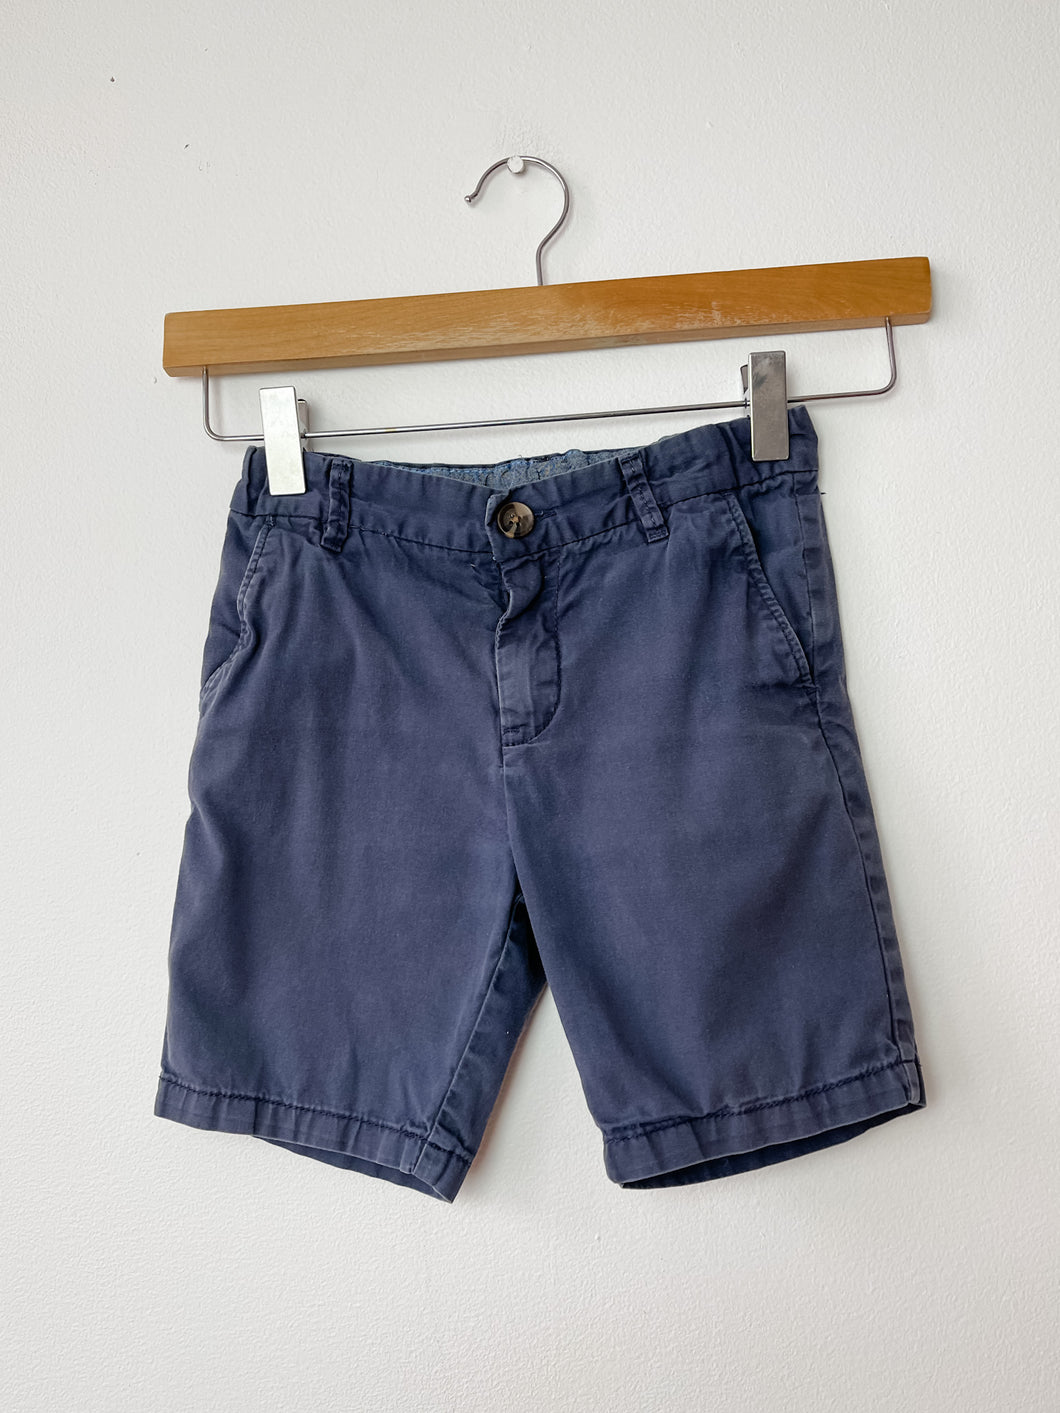 Blue H&M Shorts Size 4-5